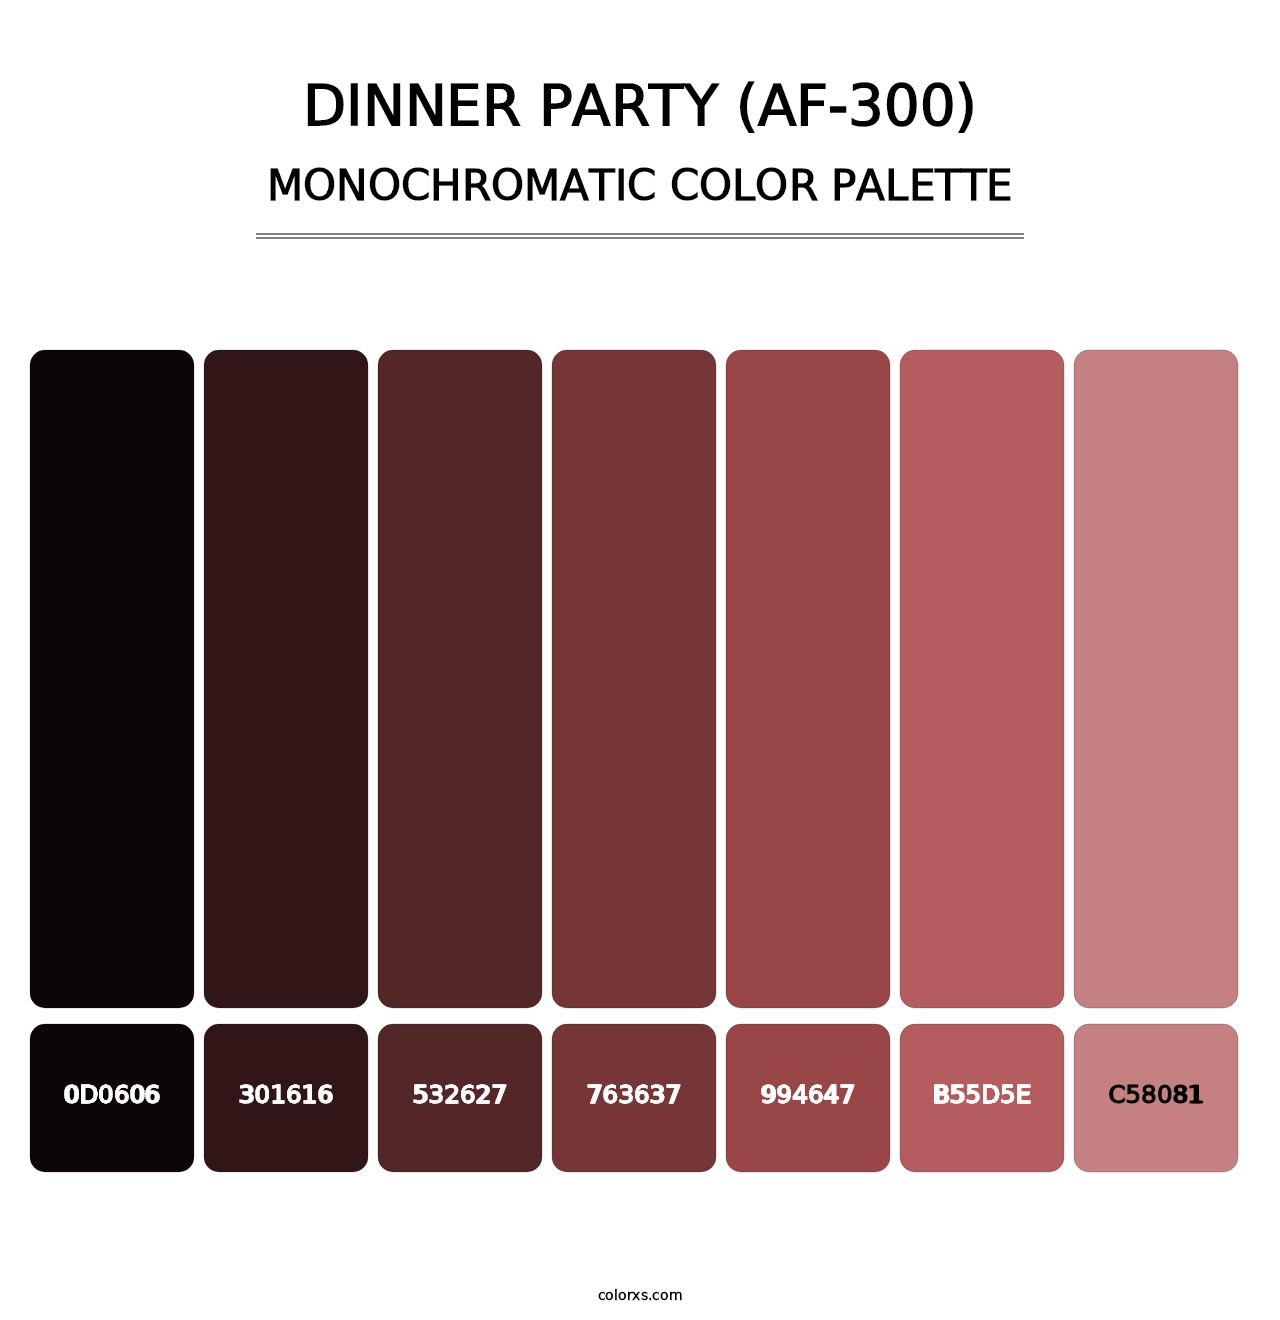 Dinner Party (AF-300) - Monochromatic Color Palette